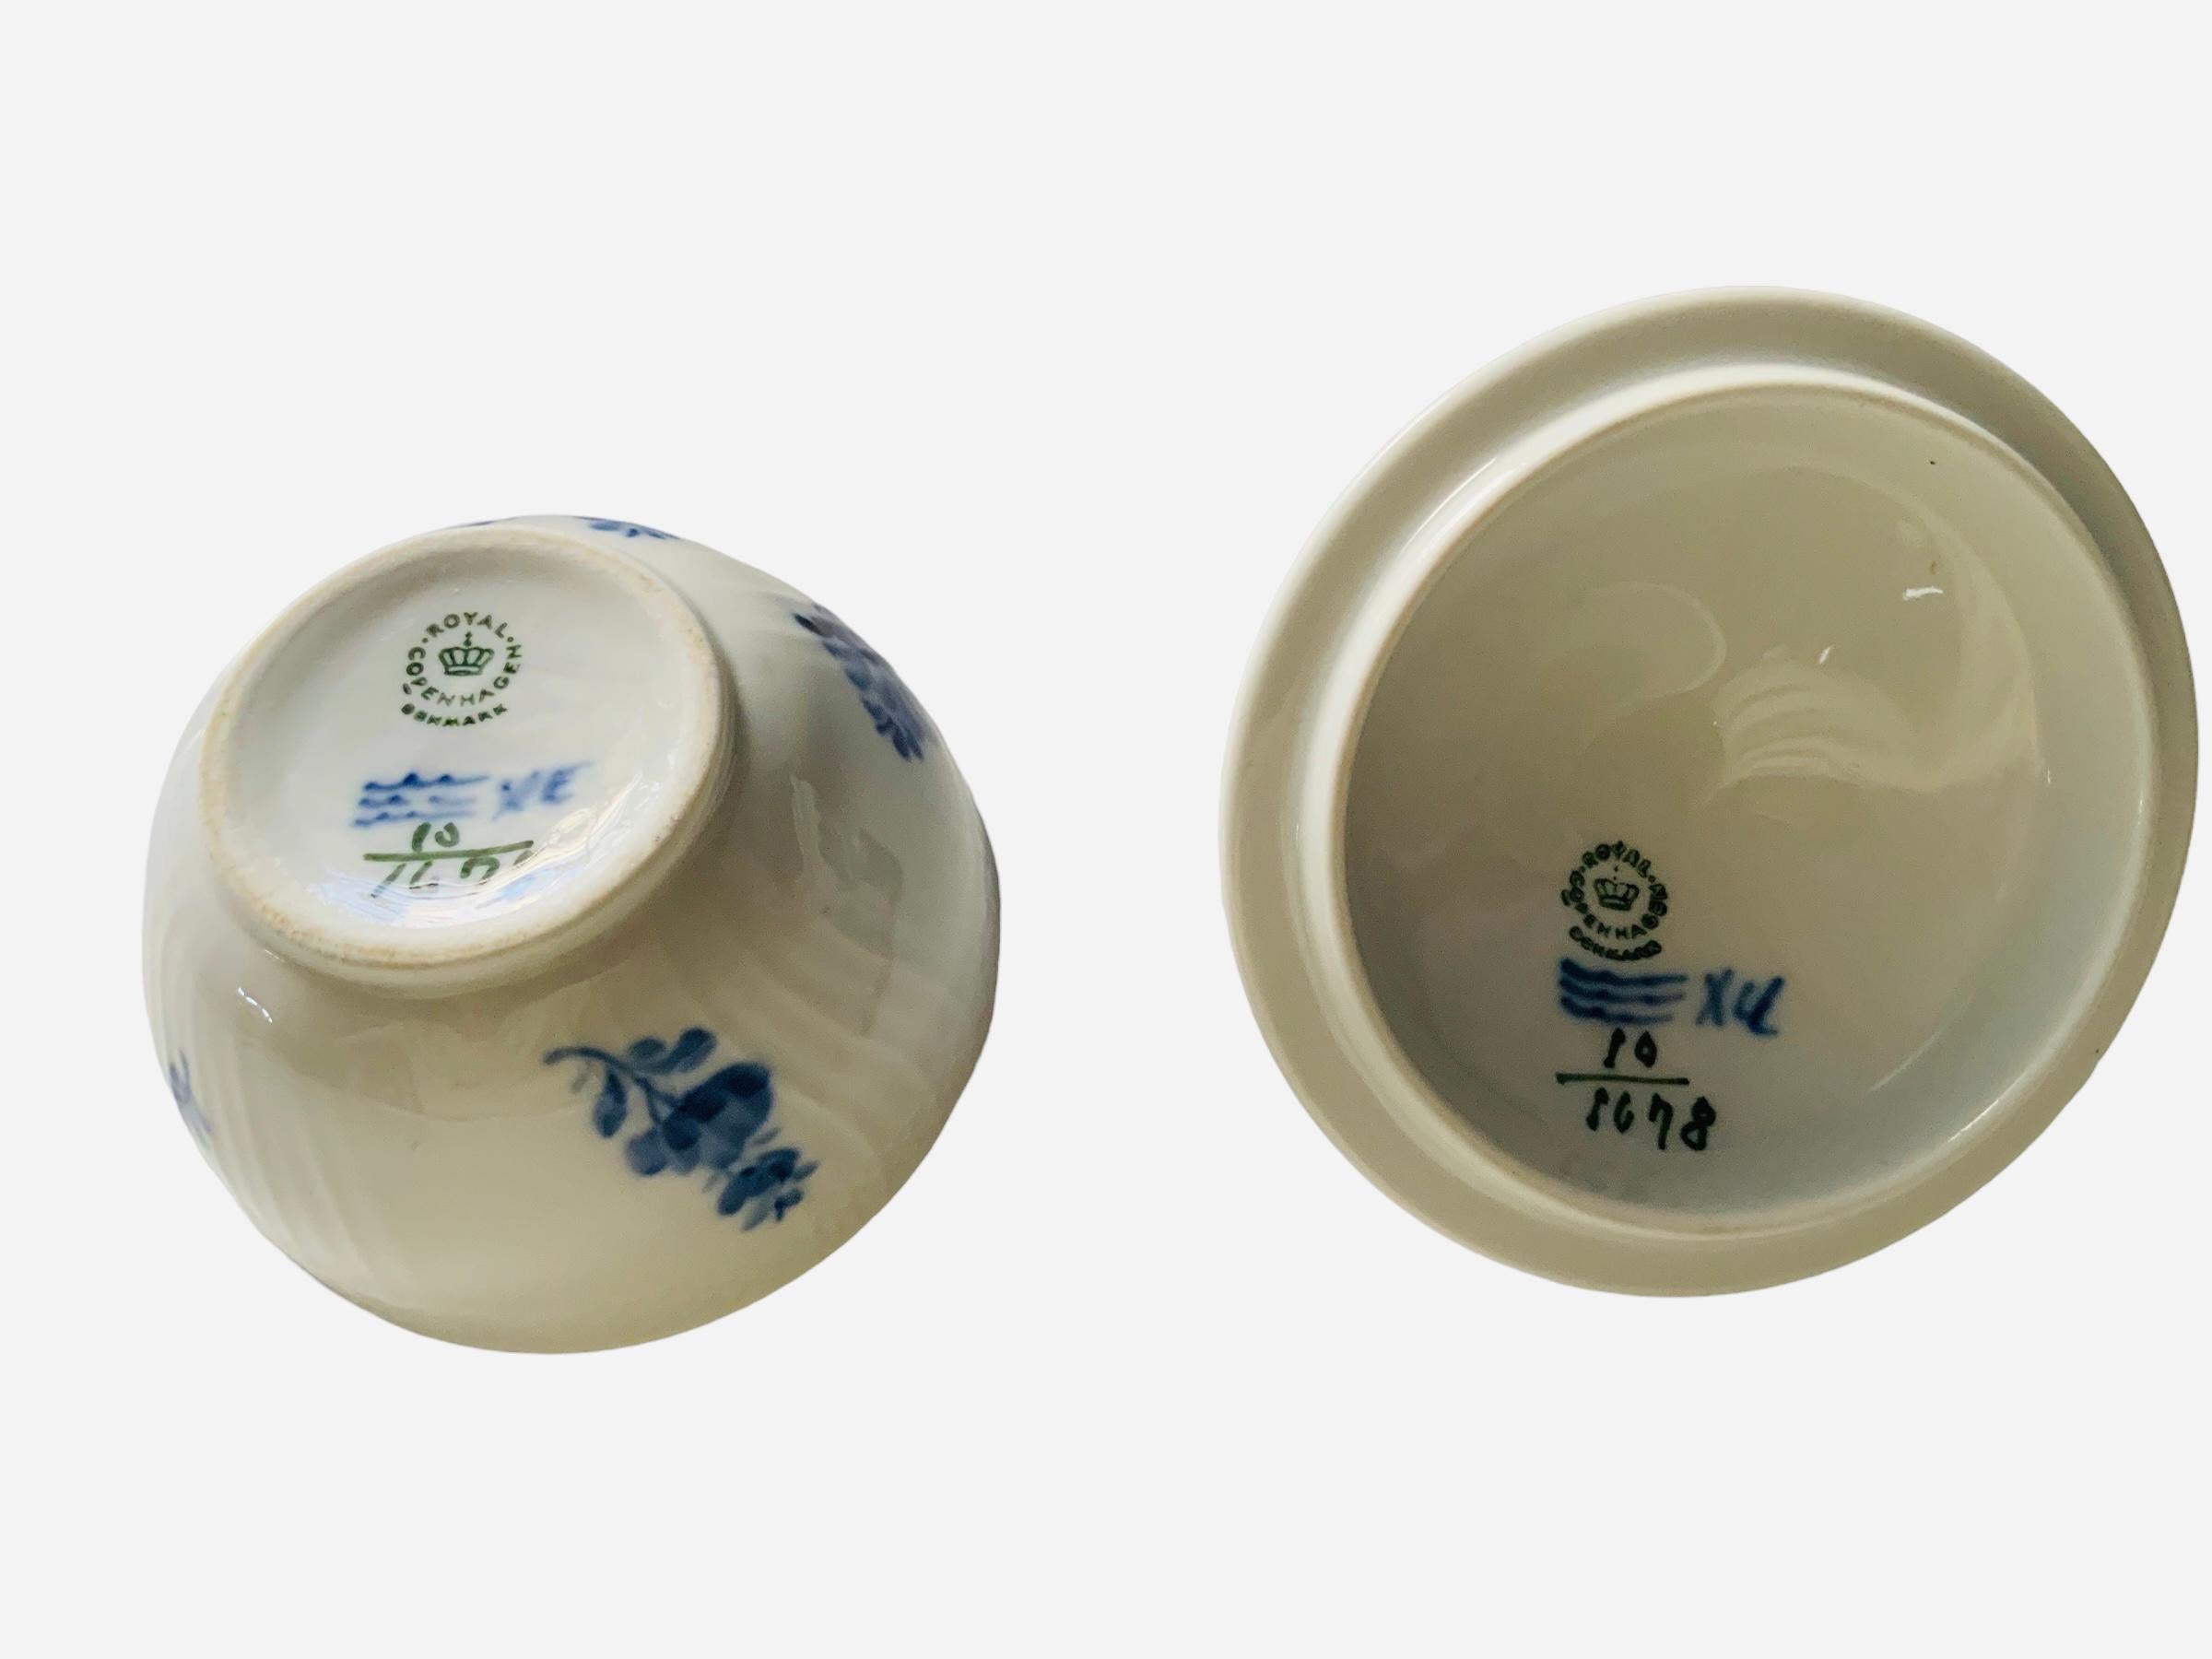 Royal Copenhagen Porcelain Sugar Bowl In Good Condition For Sale In Guaynabo, PR